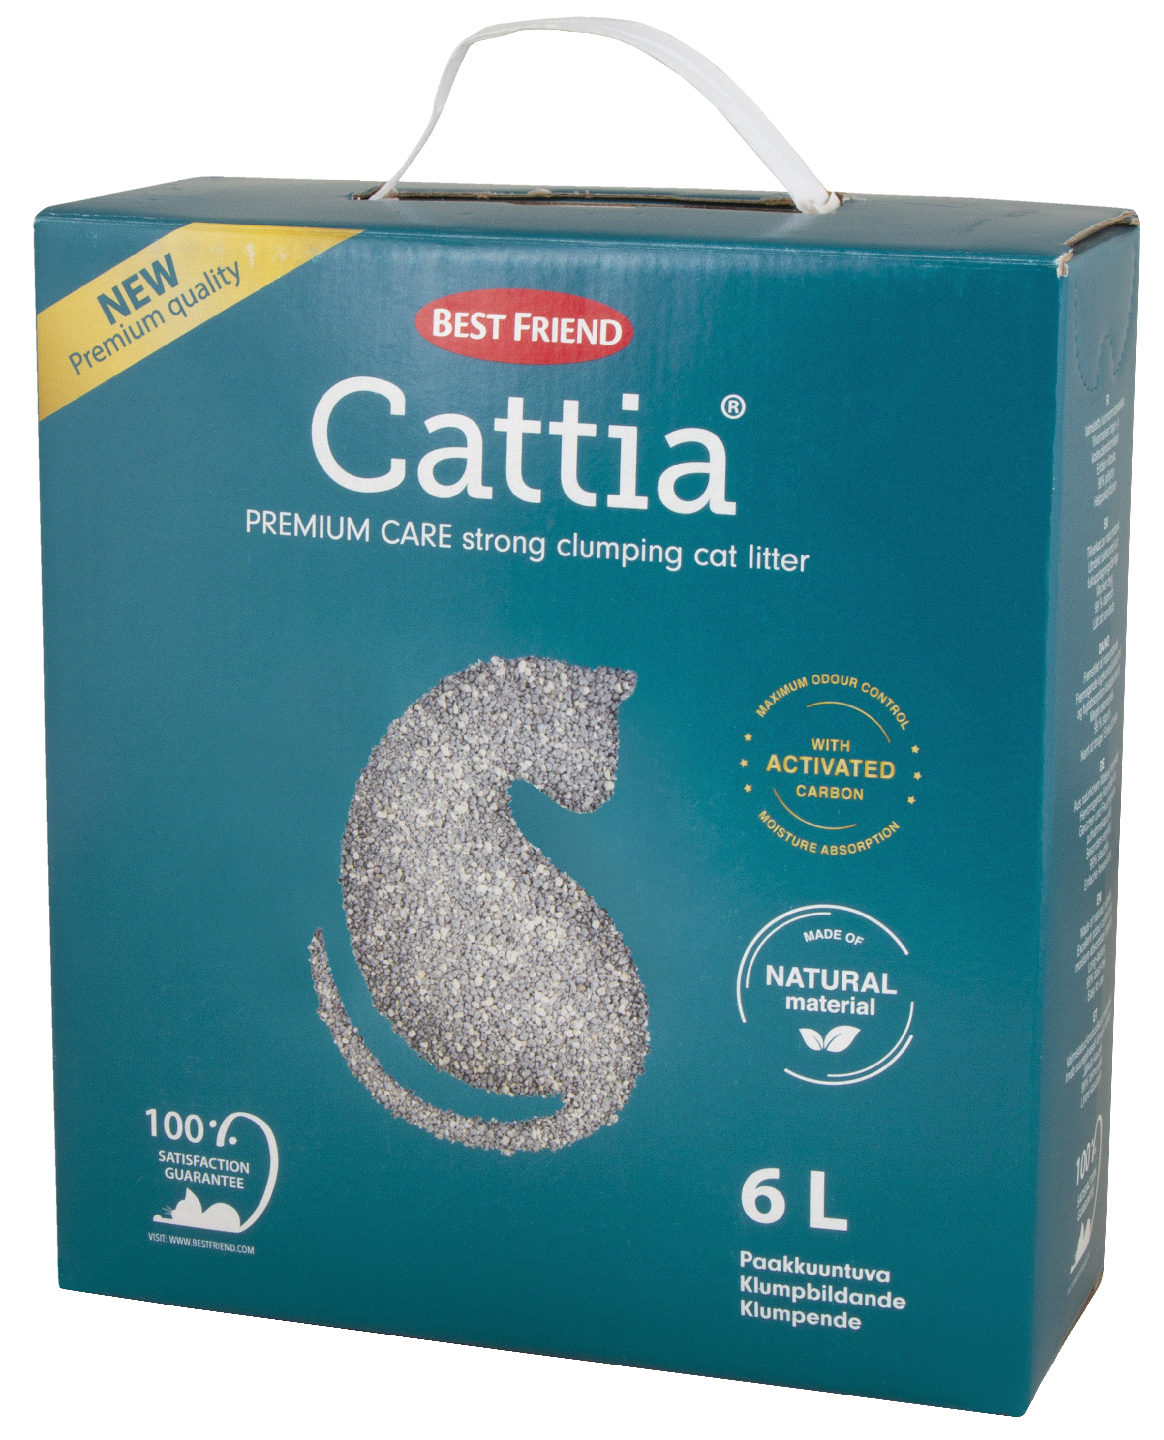 Best Friend Cattia Premium Care kissanhiekka paakkuuntuva 6L